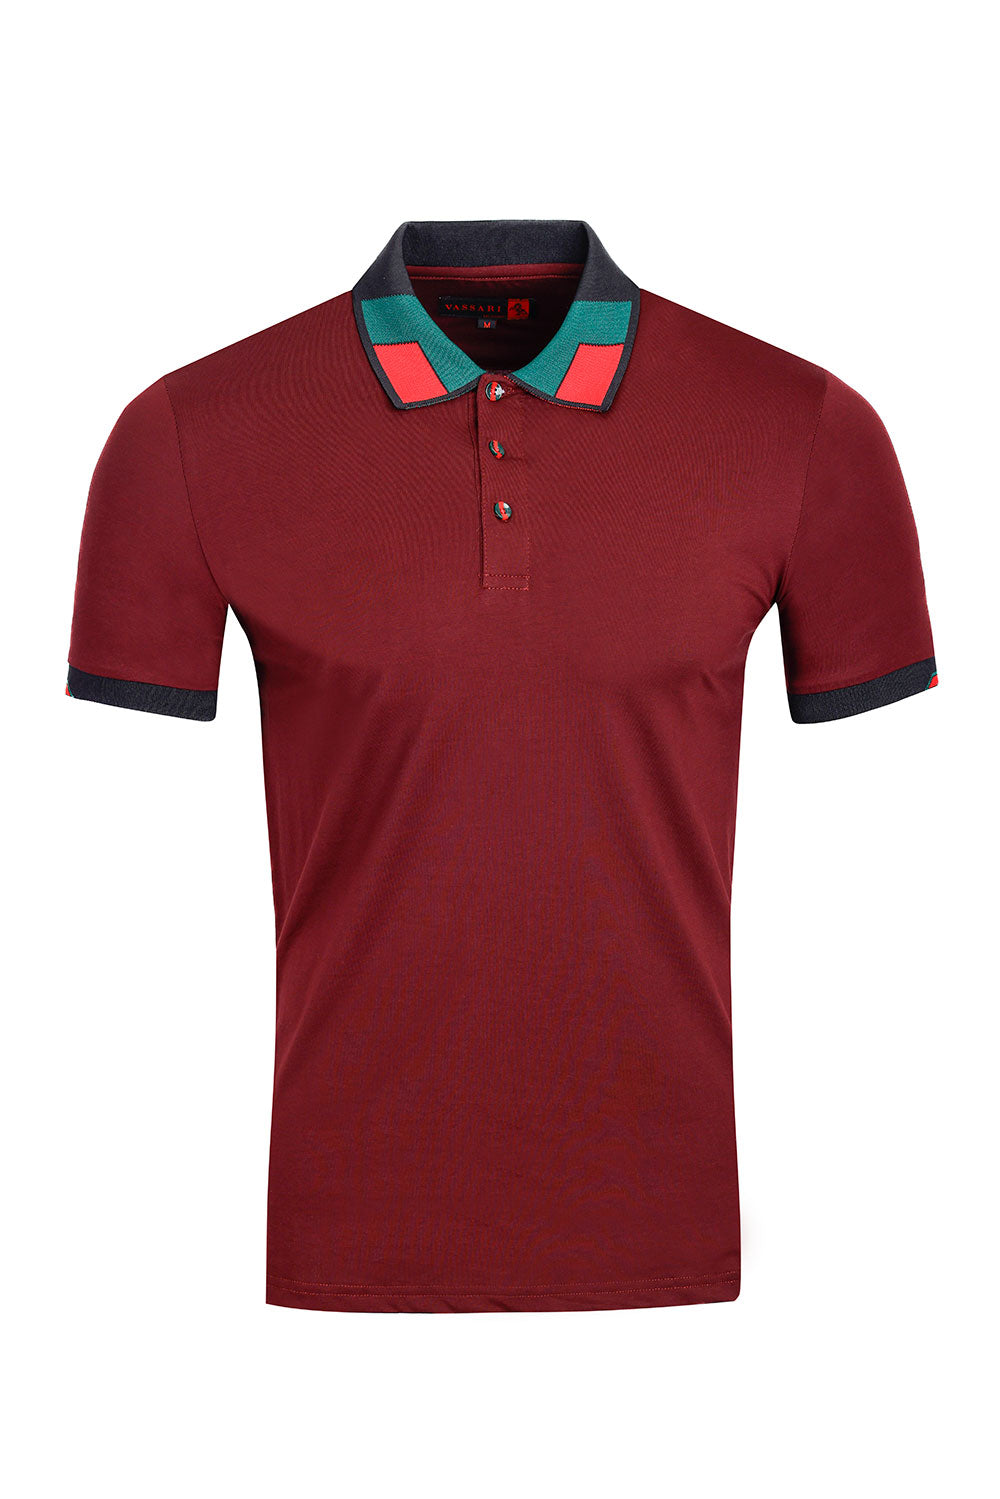 Vassari Men's Solid Color Pattern Short Sleeve Polo Shirts 3VP636 Wine